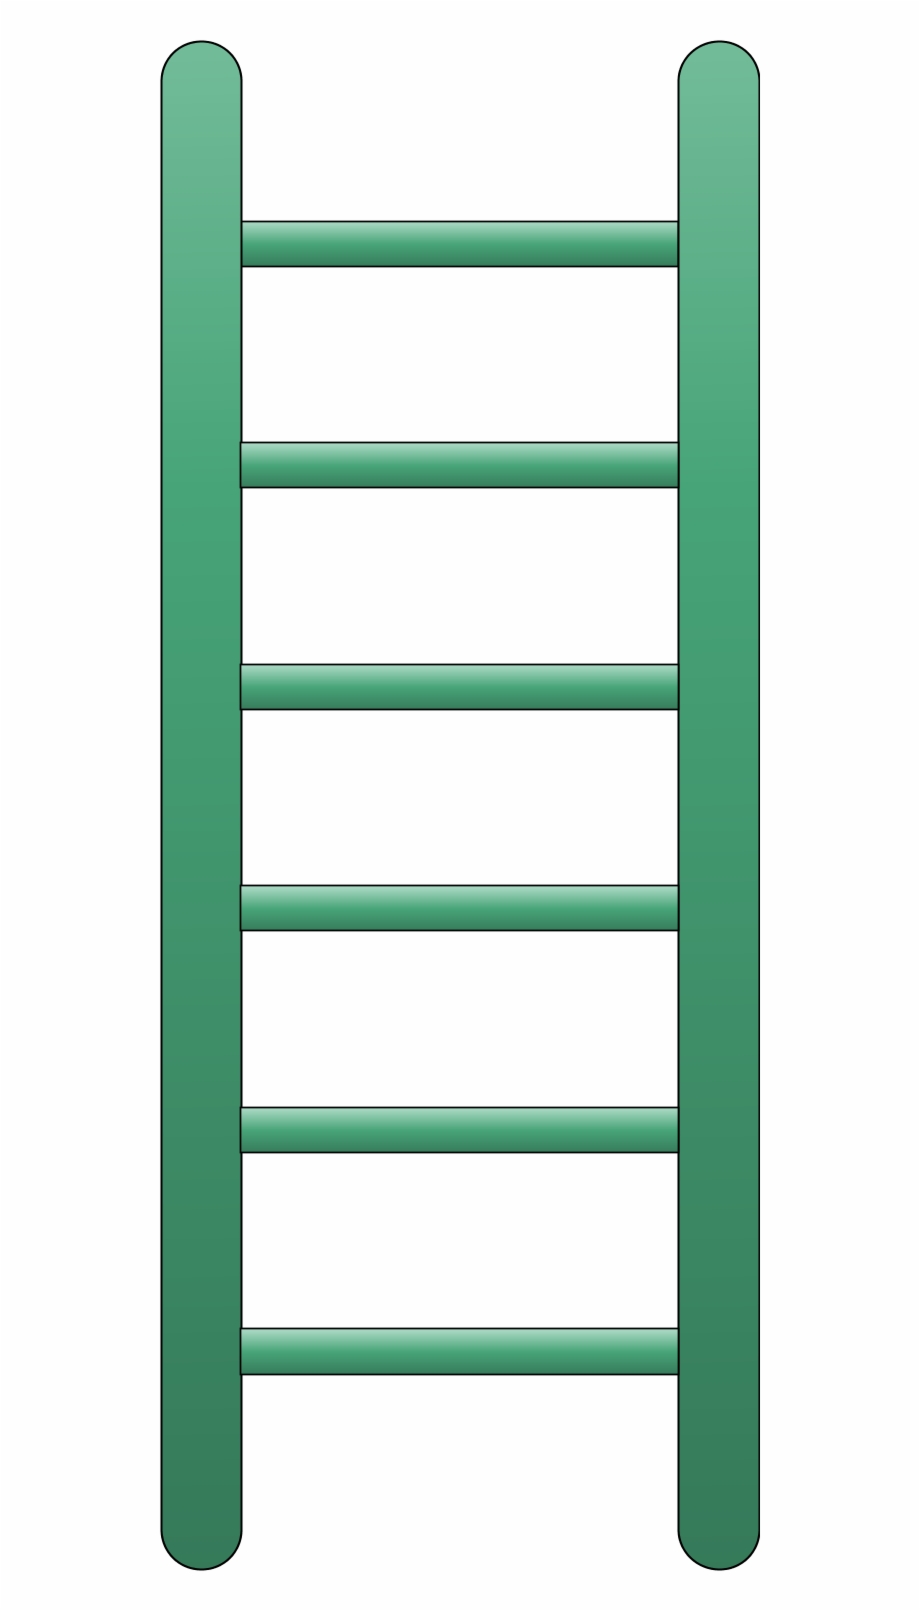 Ladder flat ladders.